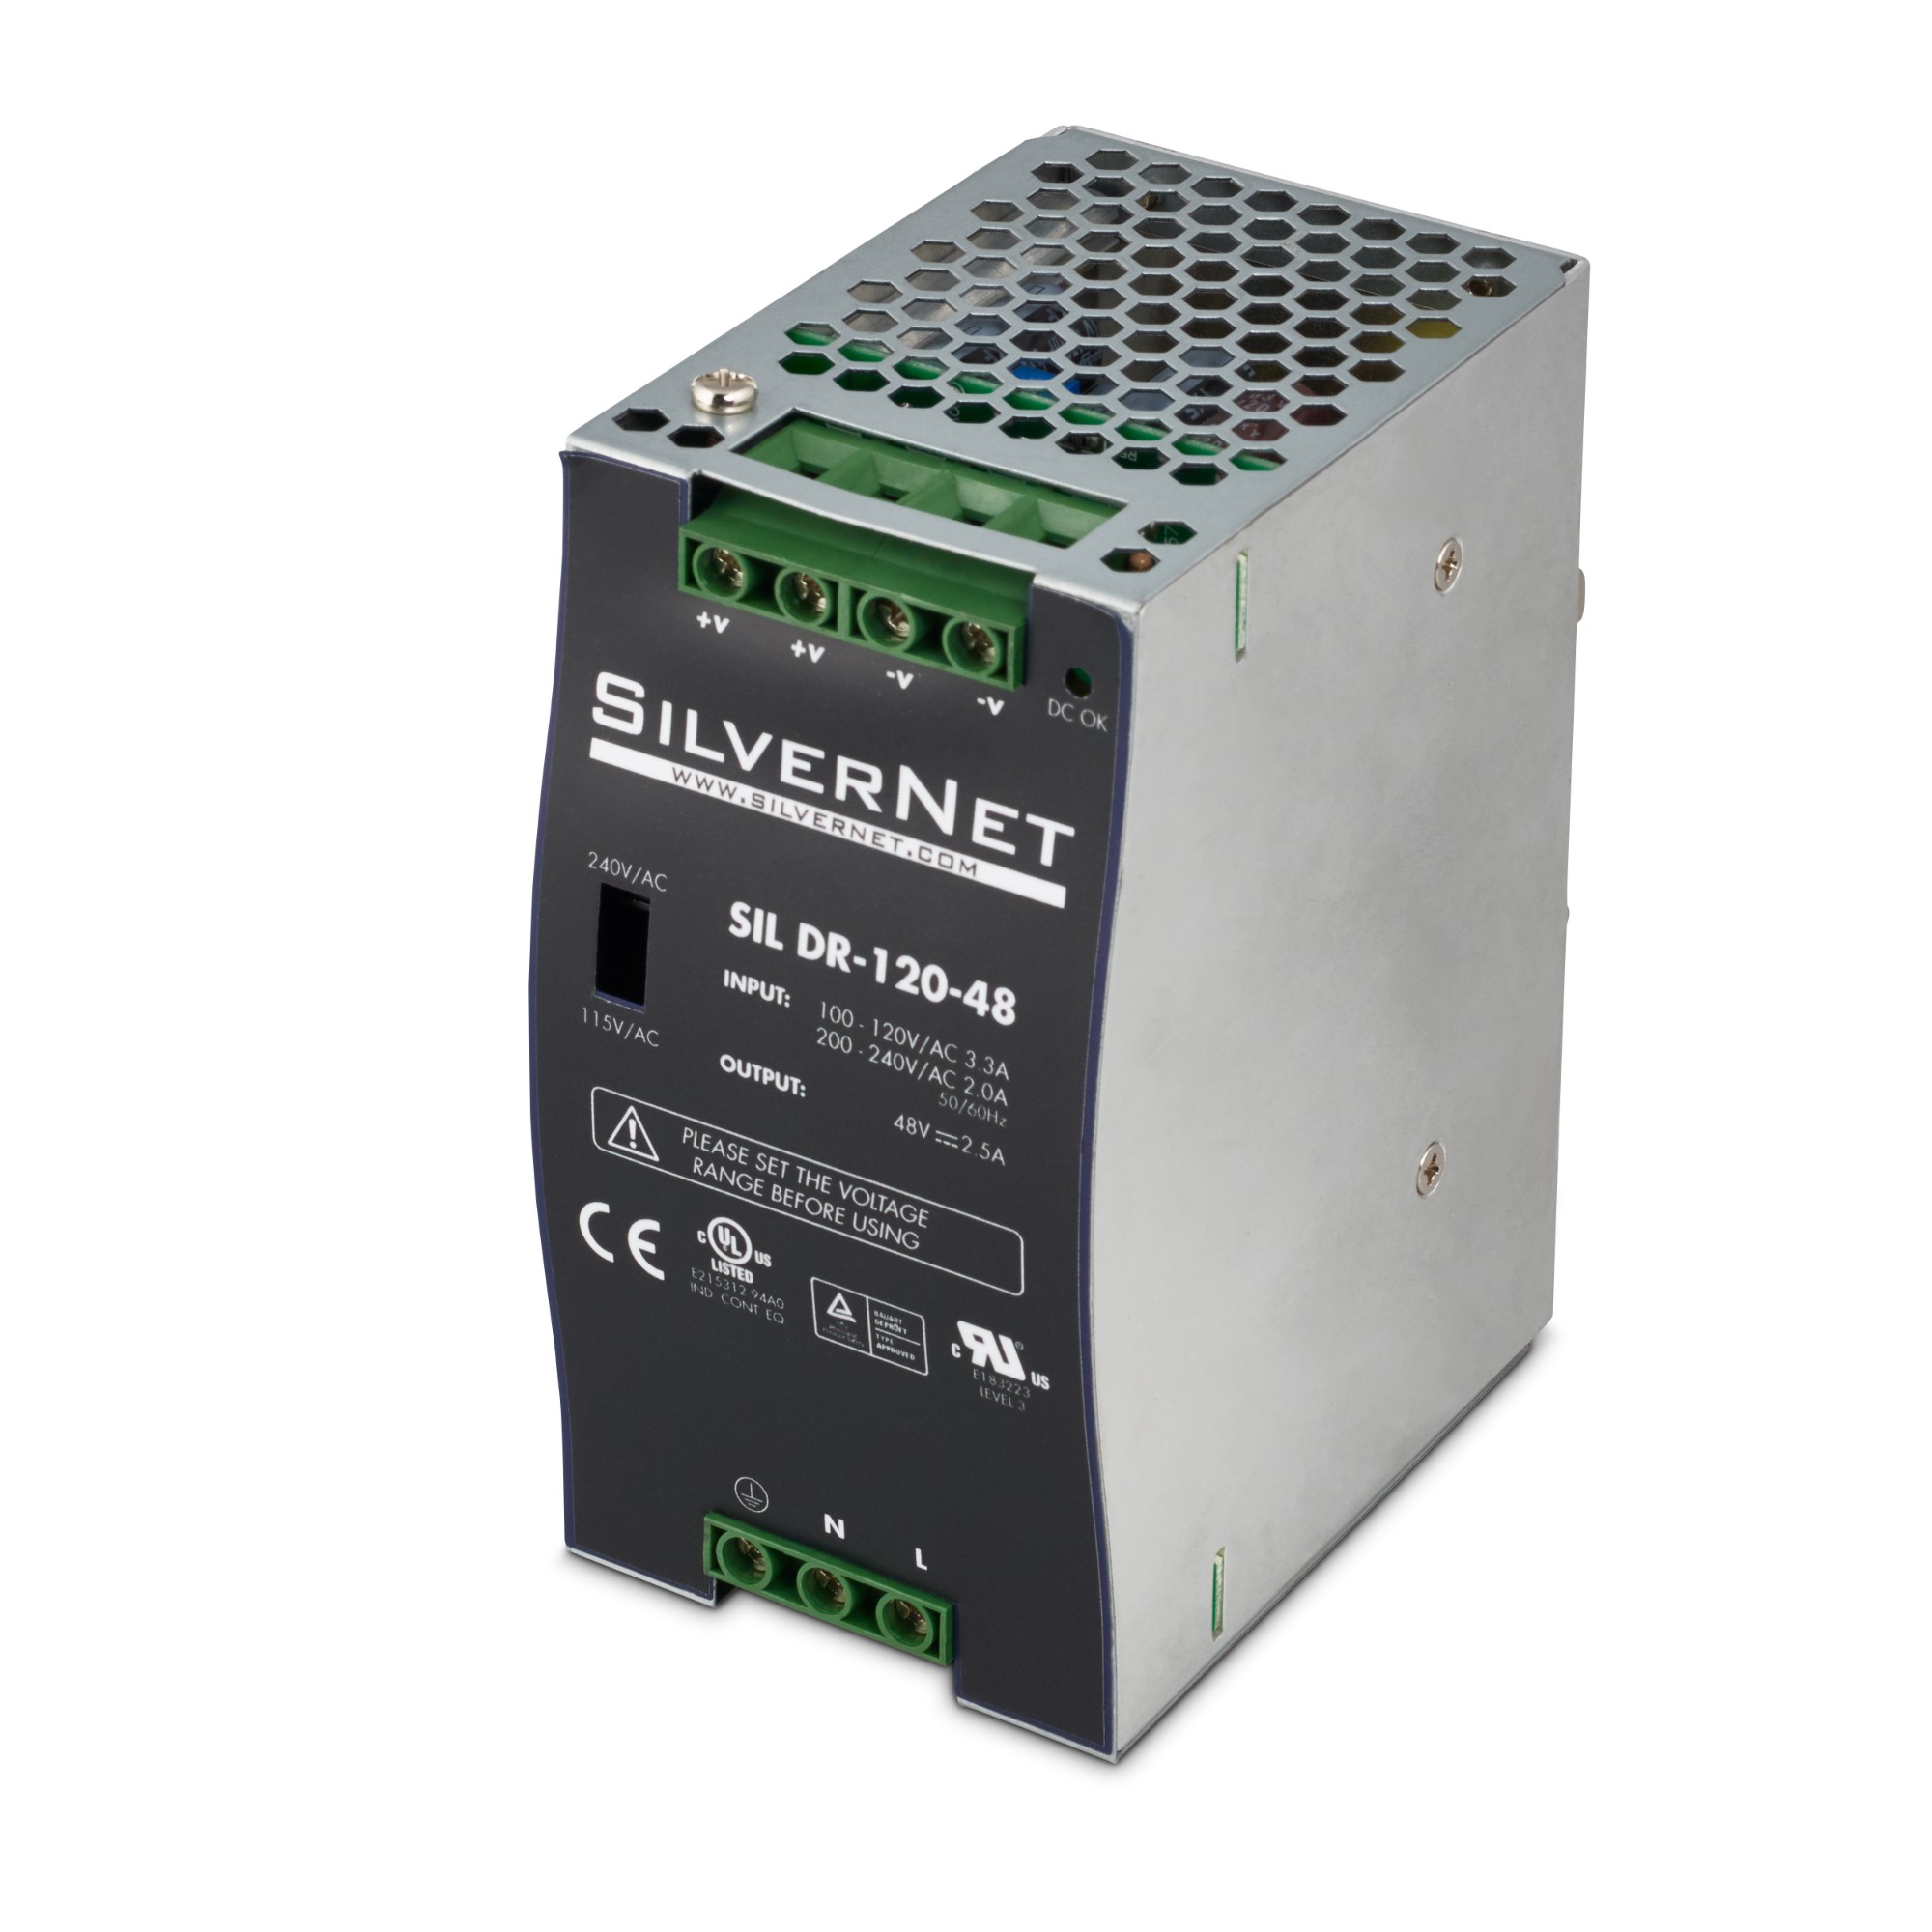 SilverNet SIL DR-120-48 Industrial PSU